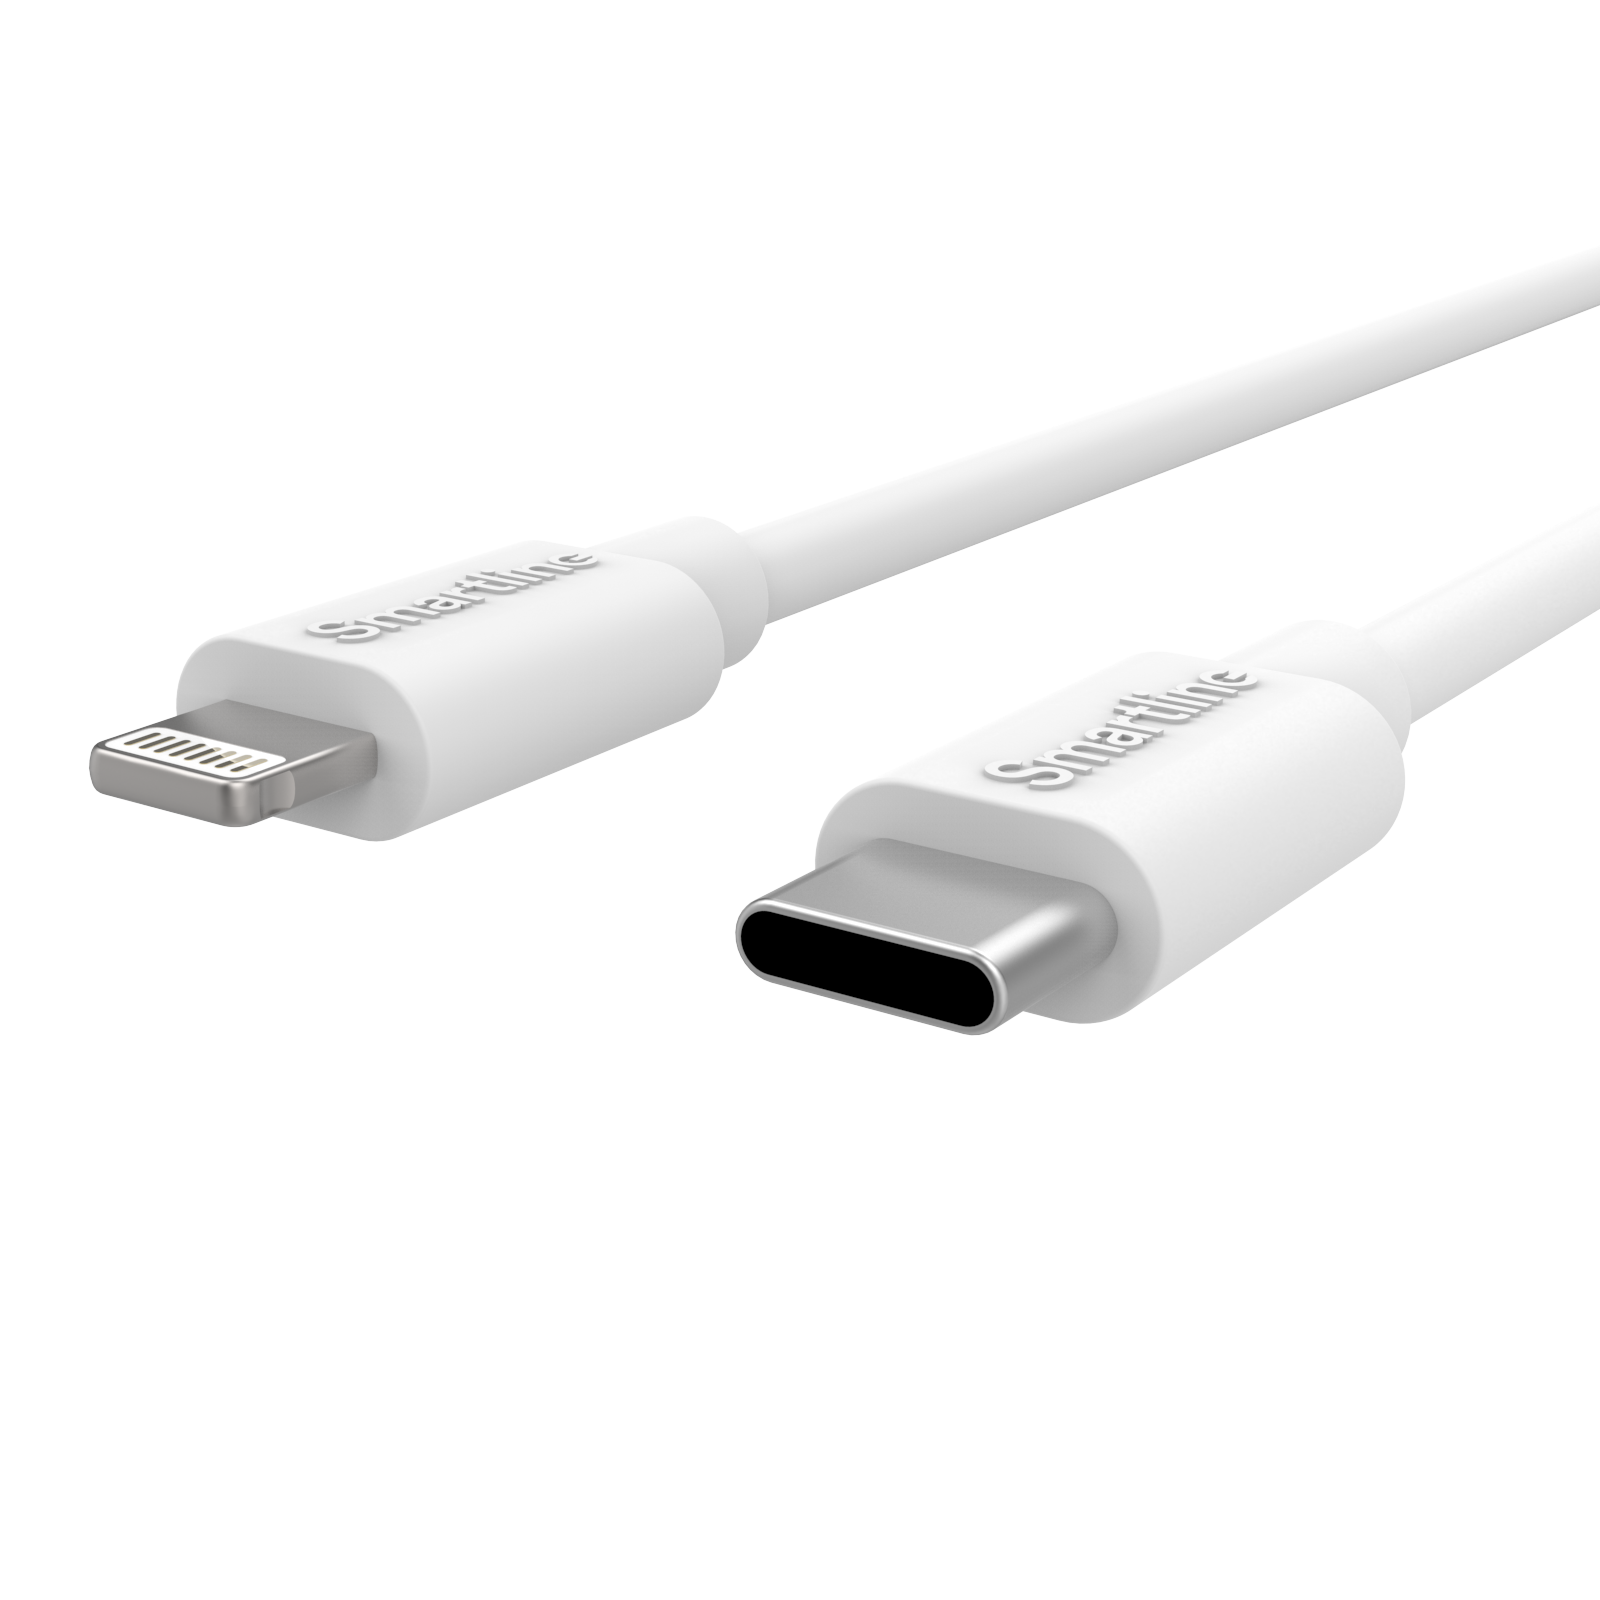 iPhone 13 Pro Kit för optimal laddning med 2m kabel, vit